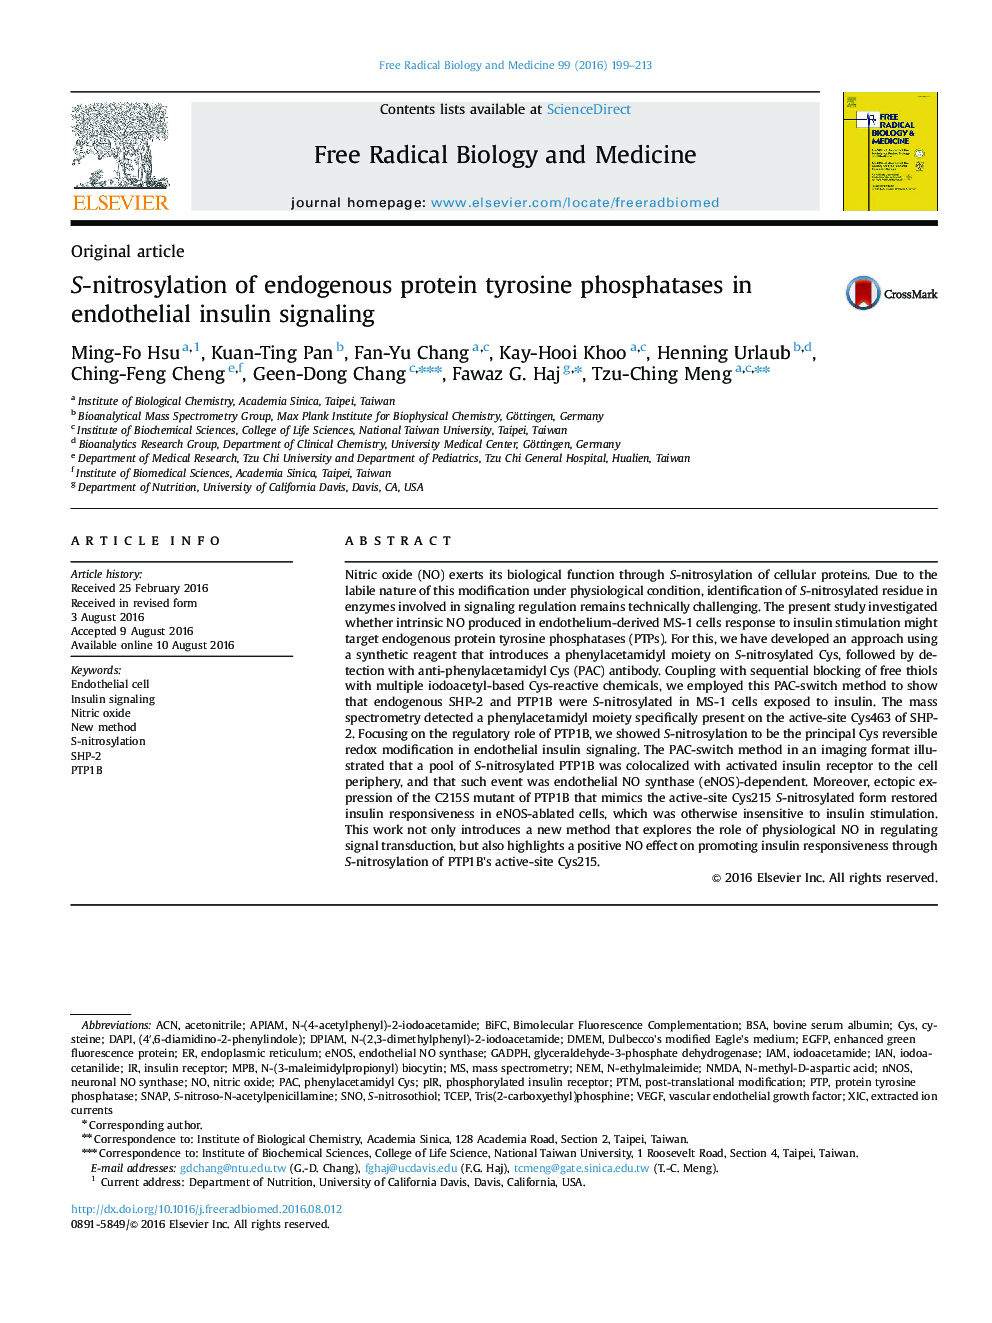 S-nitrosylation of endogenous protein tyrosine phosphatases in endothelial insulin signaling